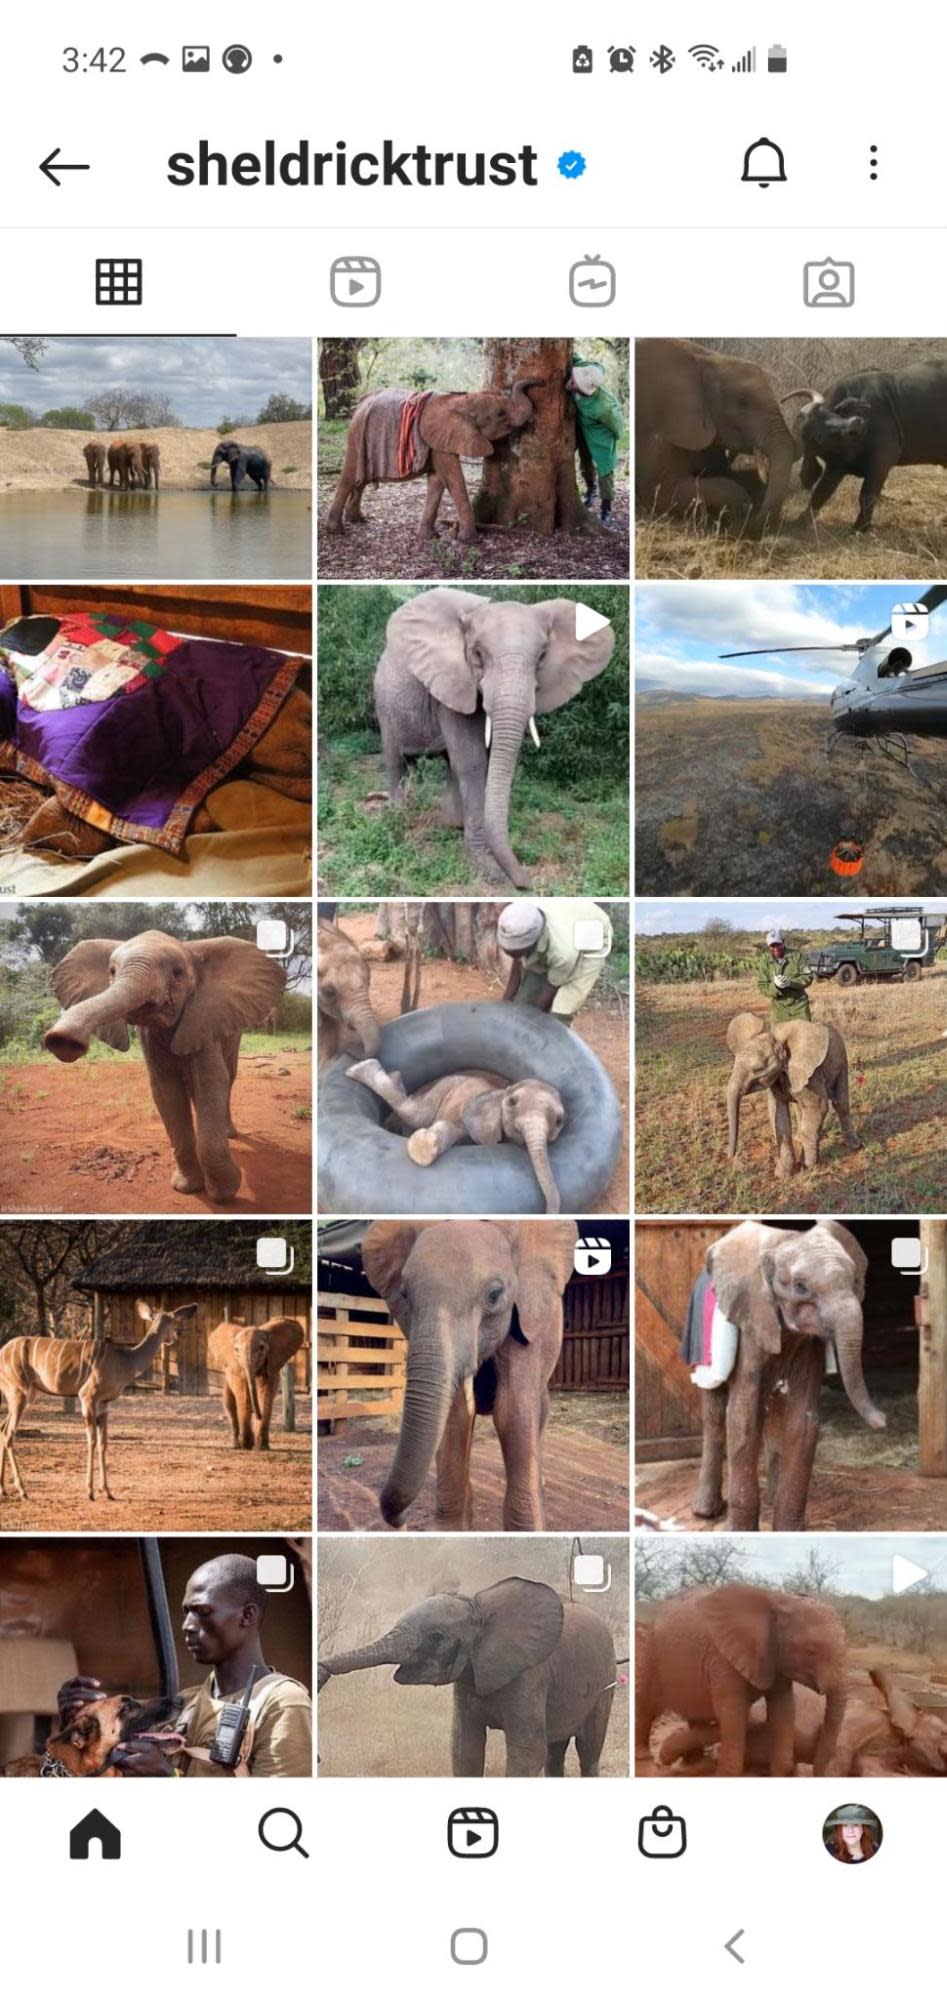 The Sheldrick Trust Instagram feed (elephants!)